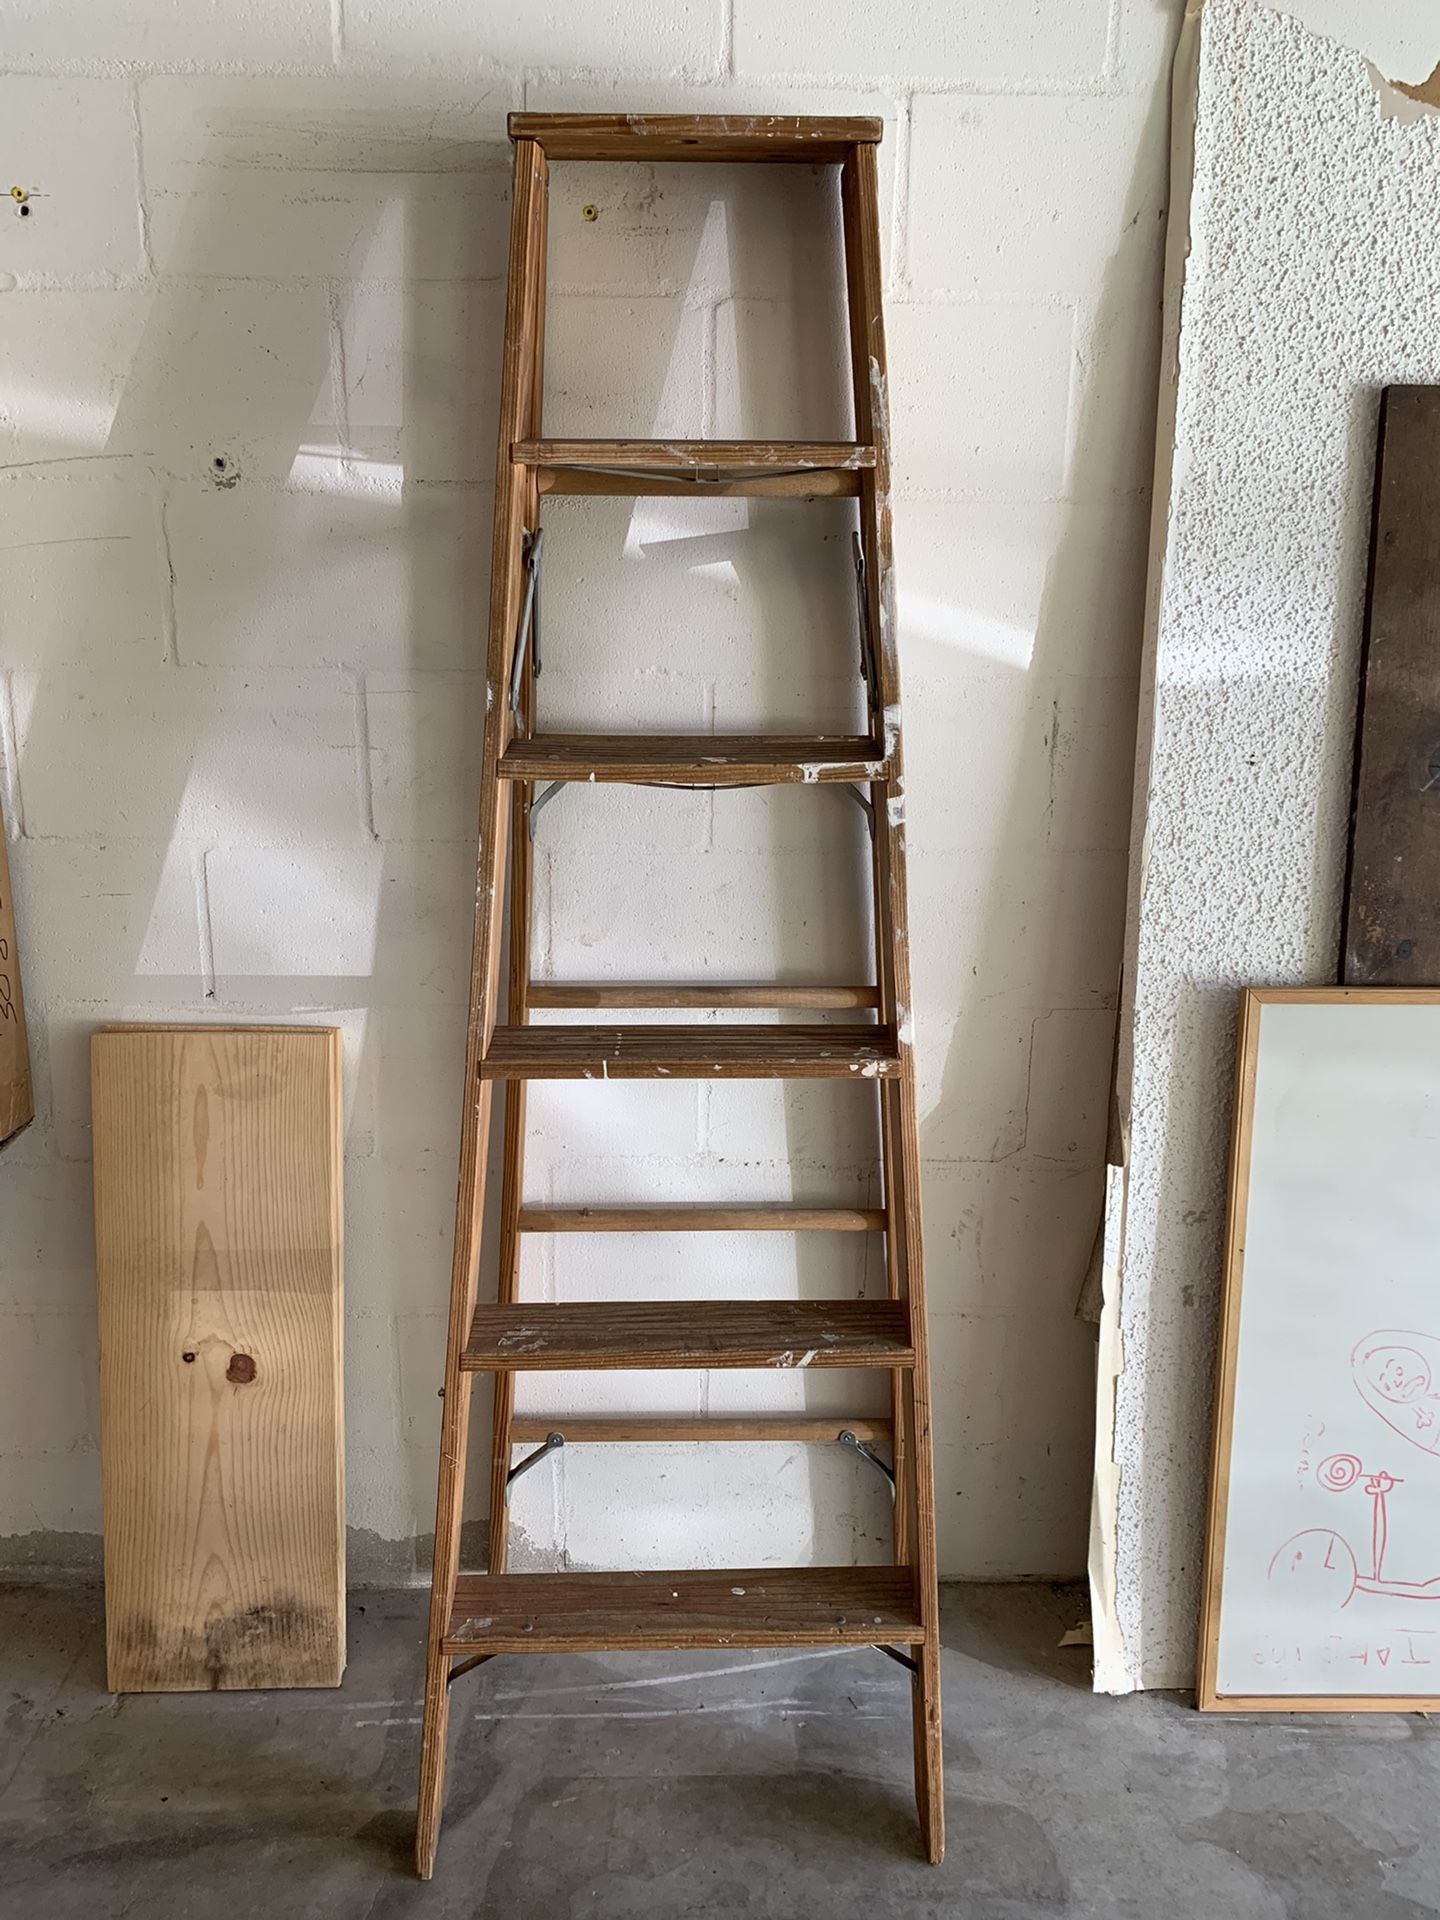 6 foot wood step ladder